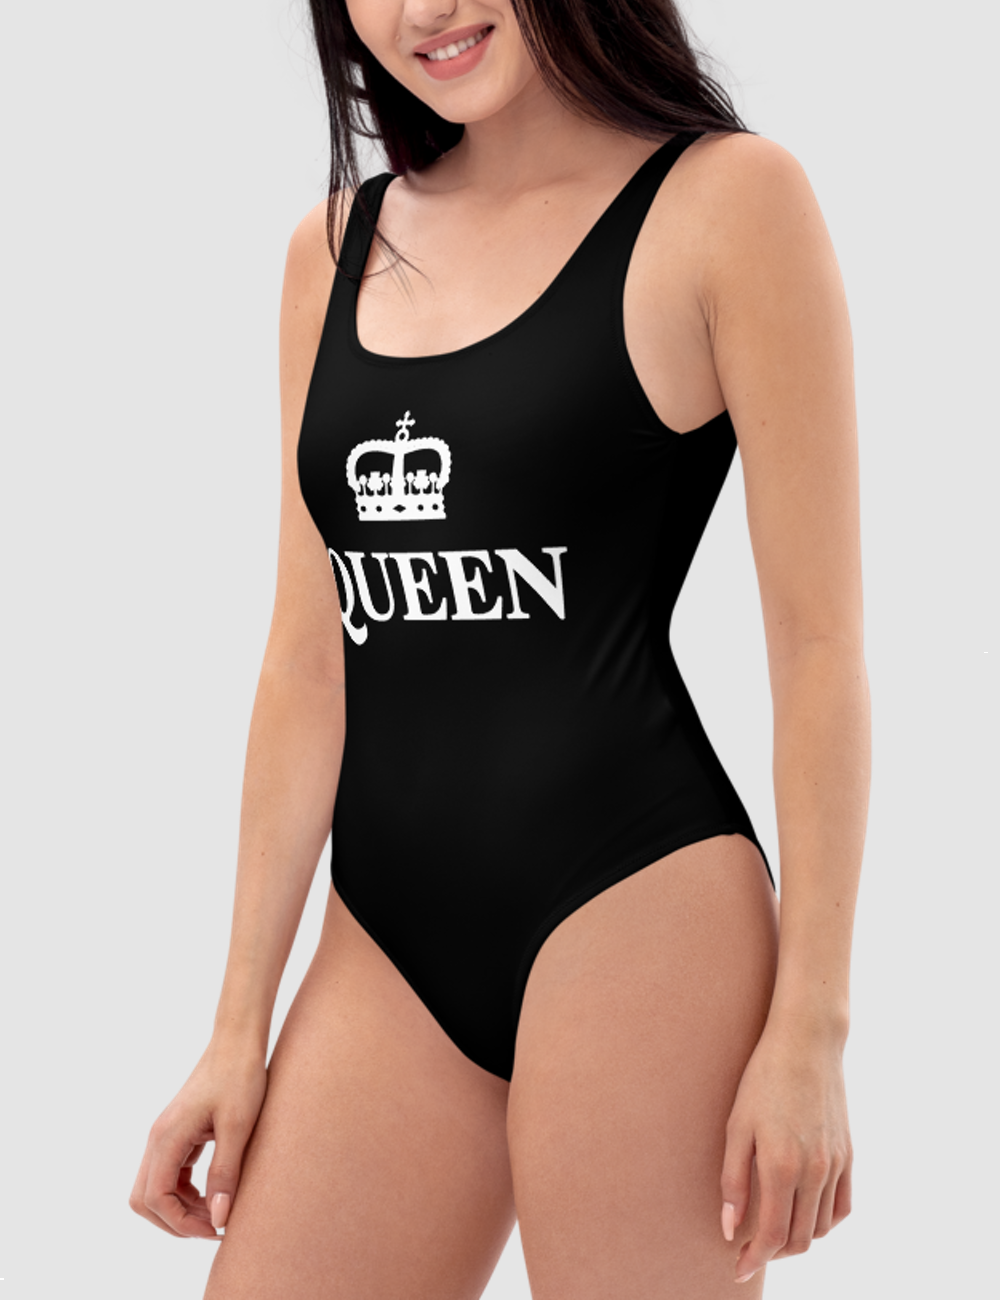 The Queen | Women's One-Piece Swimsuit OniTakai